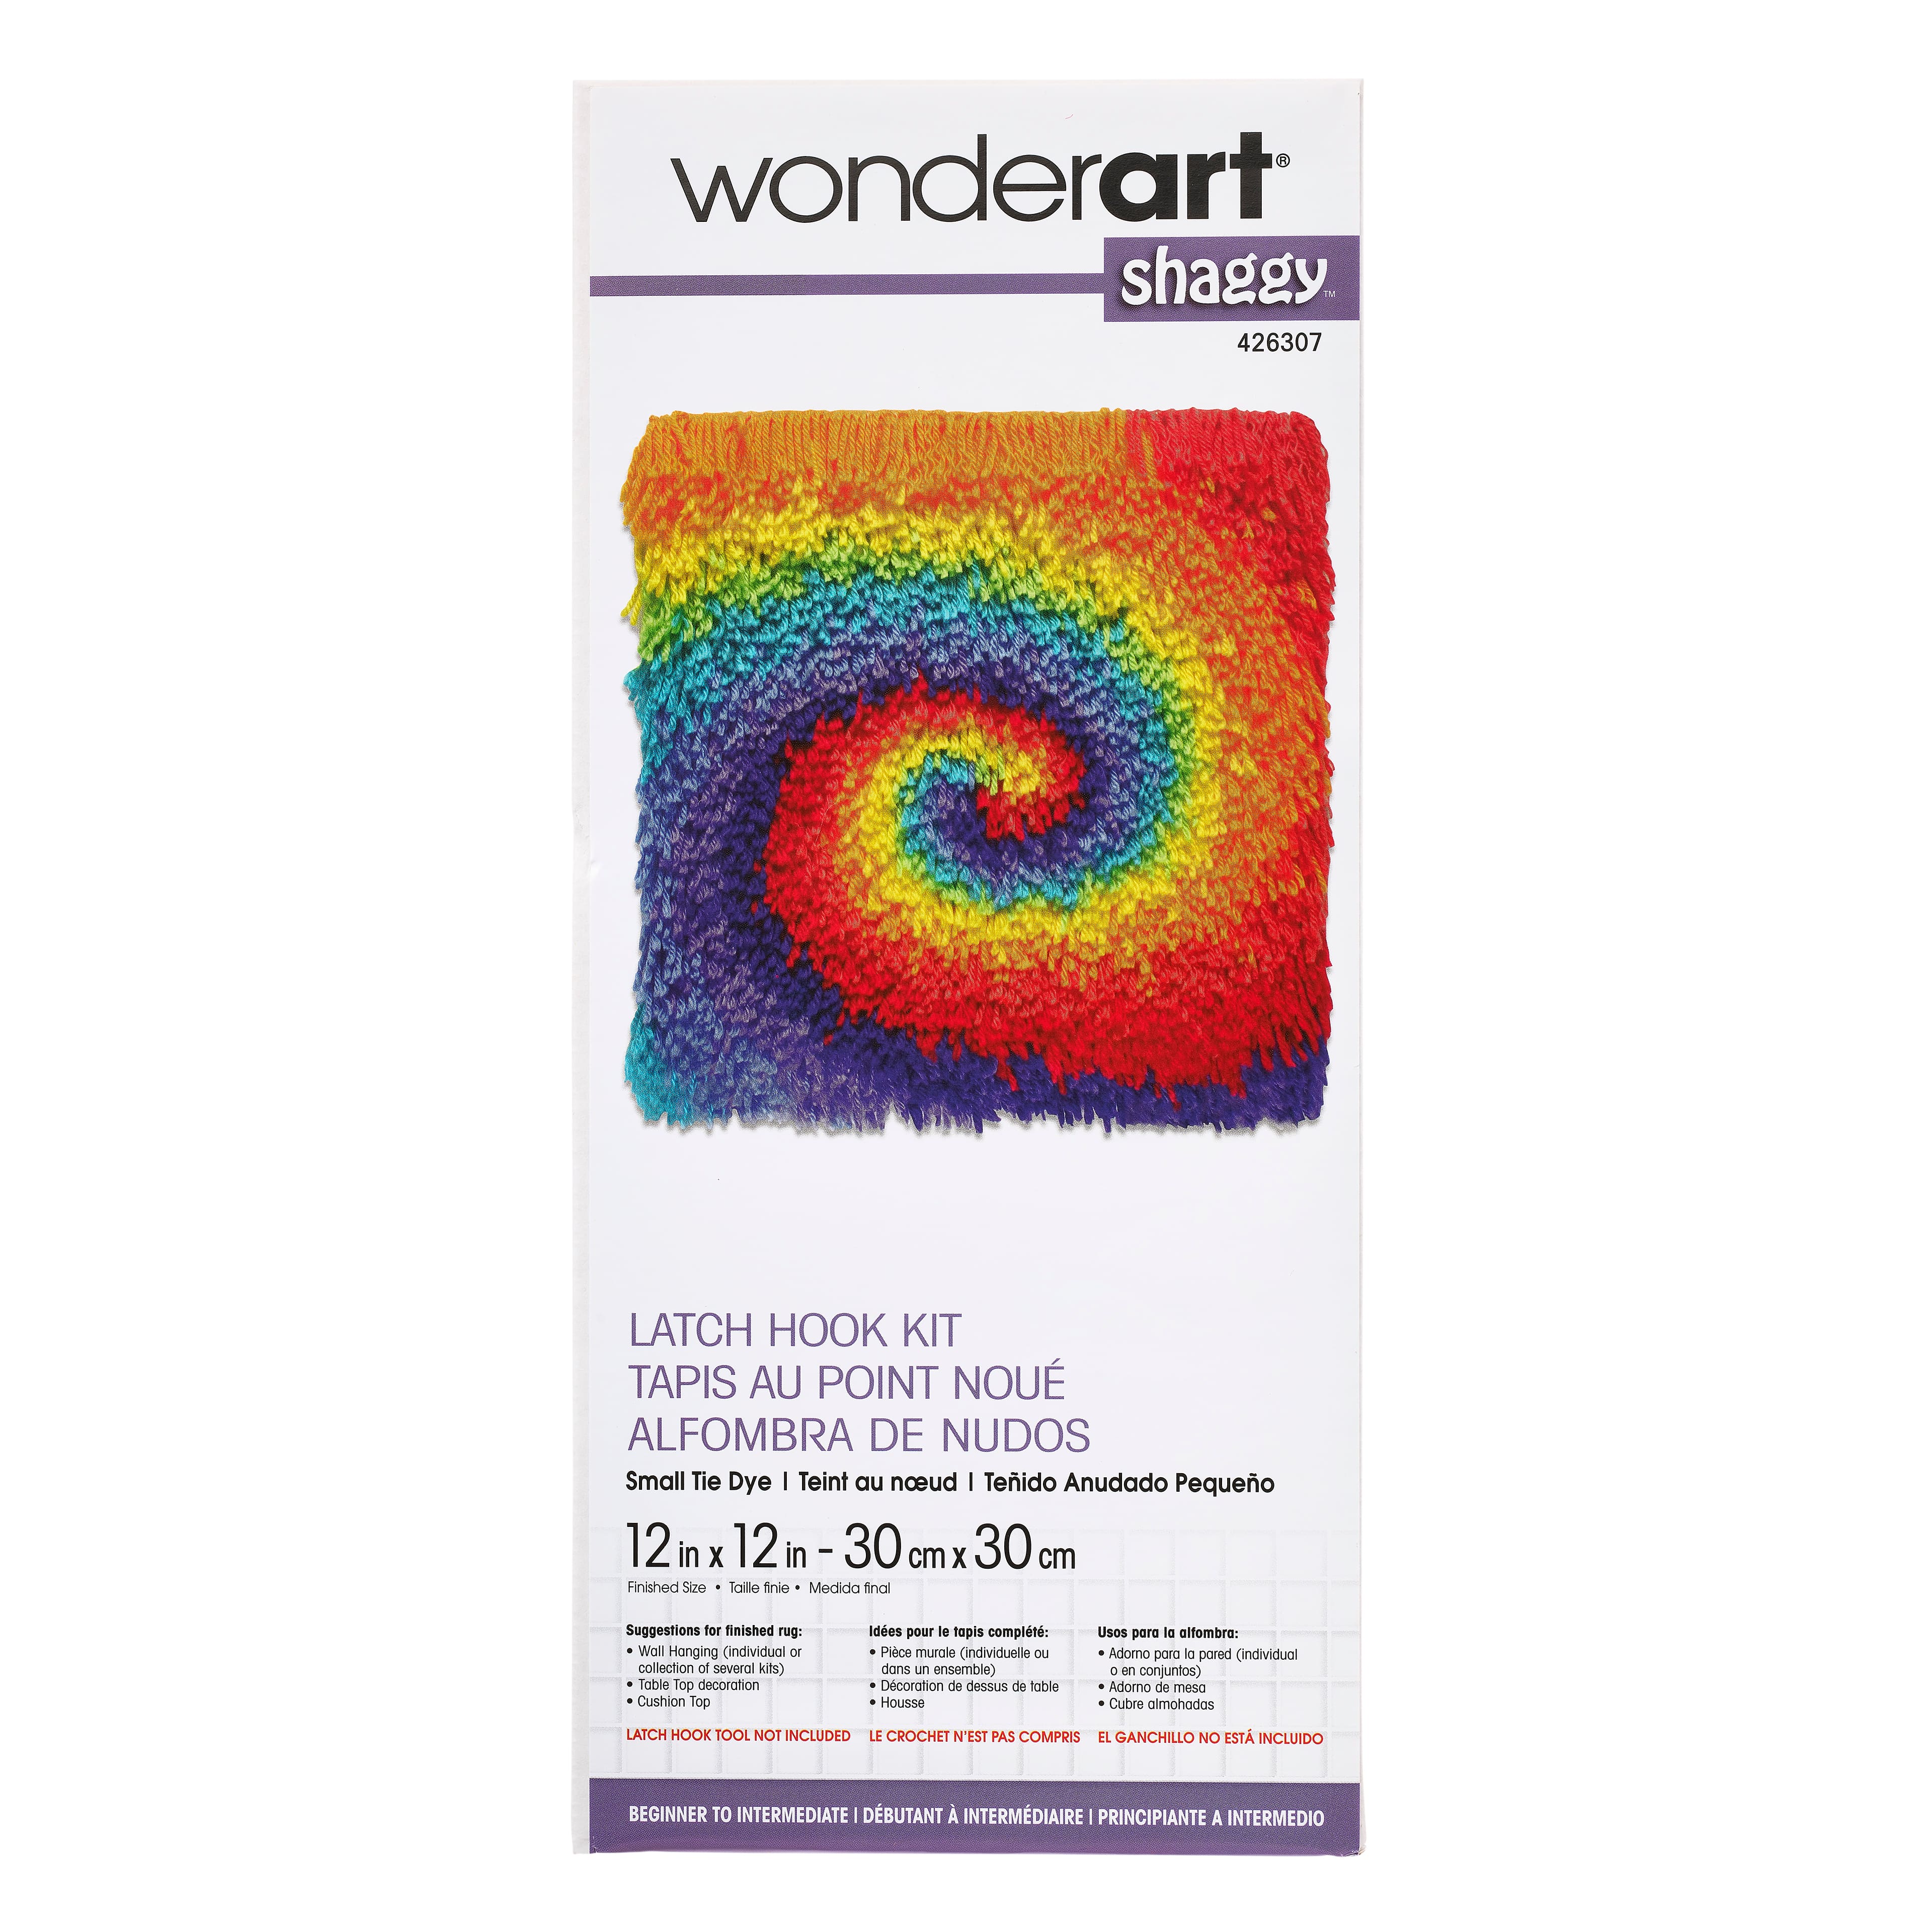 Wonderart 12 inch x 12 inch Latch Hook Kit, Shaggy Small Tie Dye, Acrylic Yarn Cotton Canvas, Size: 12 x 12